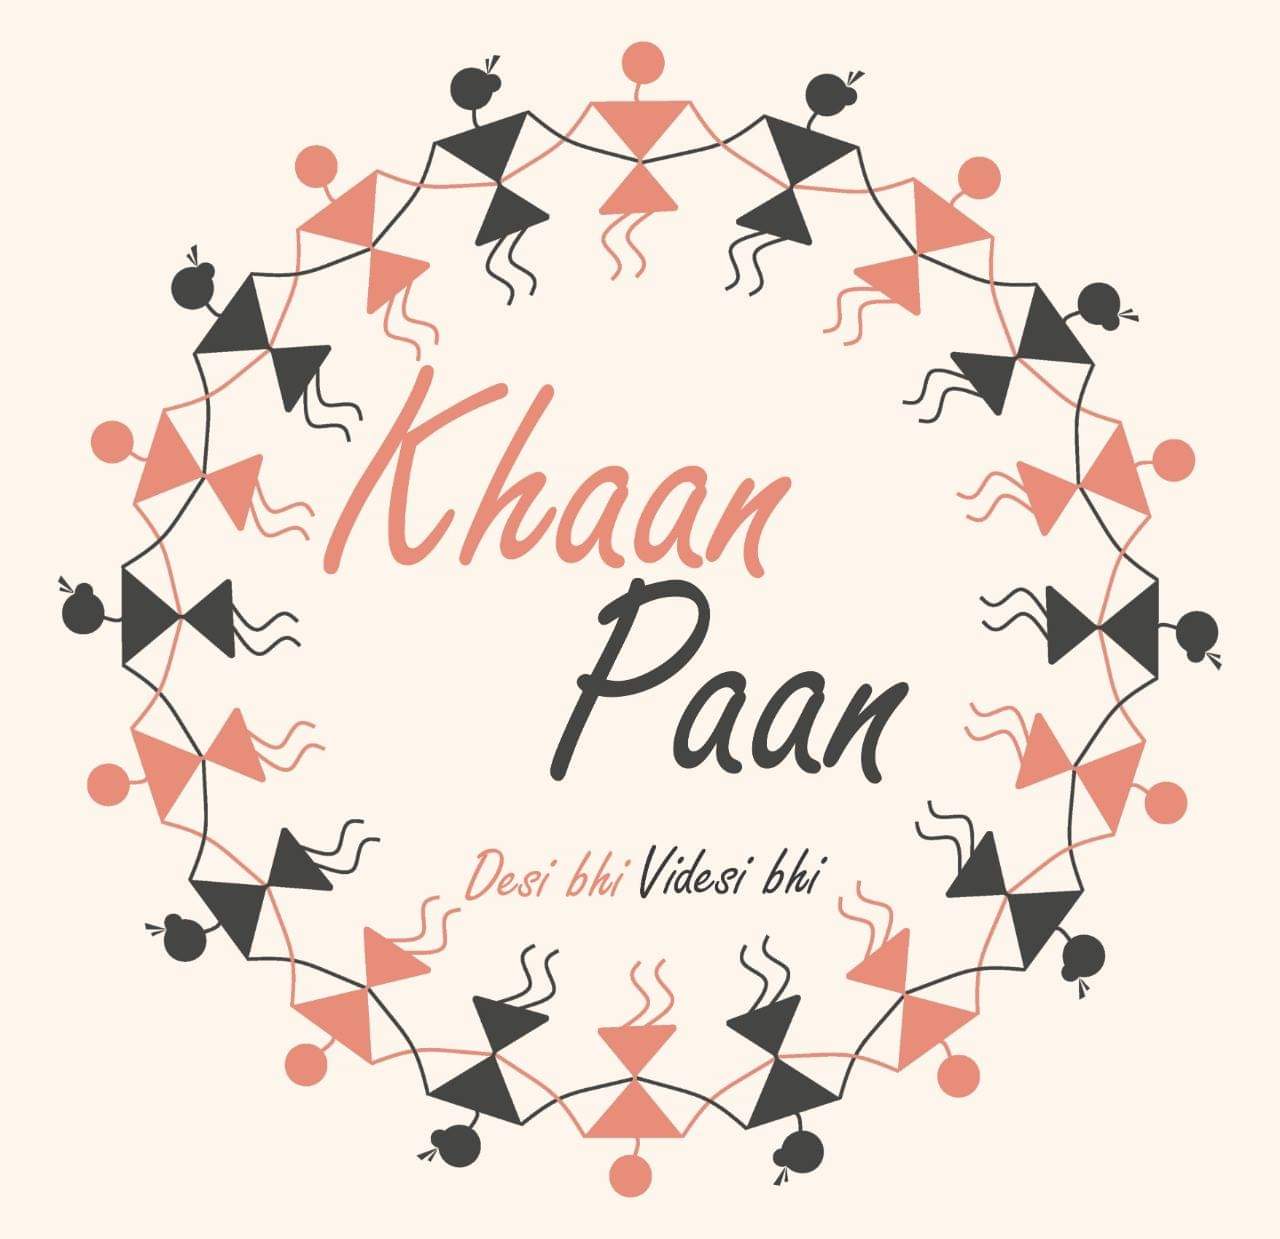 Khaan Paan Vasant Kunj South Delhi online delivery in Noida, Delhi, NCR,
                    Gurgaon